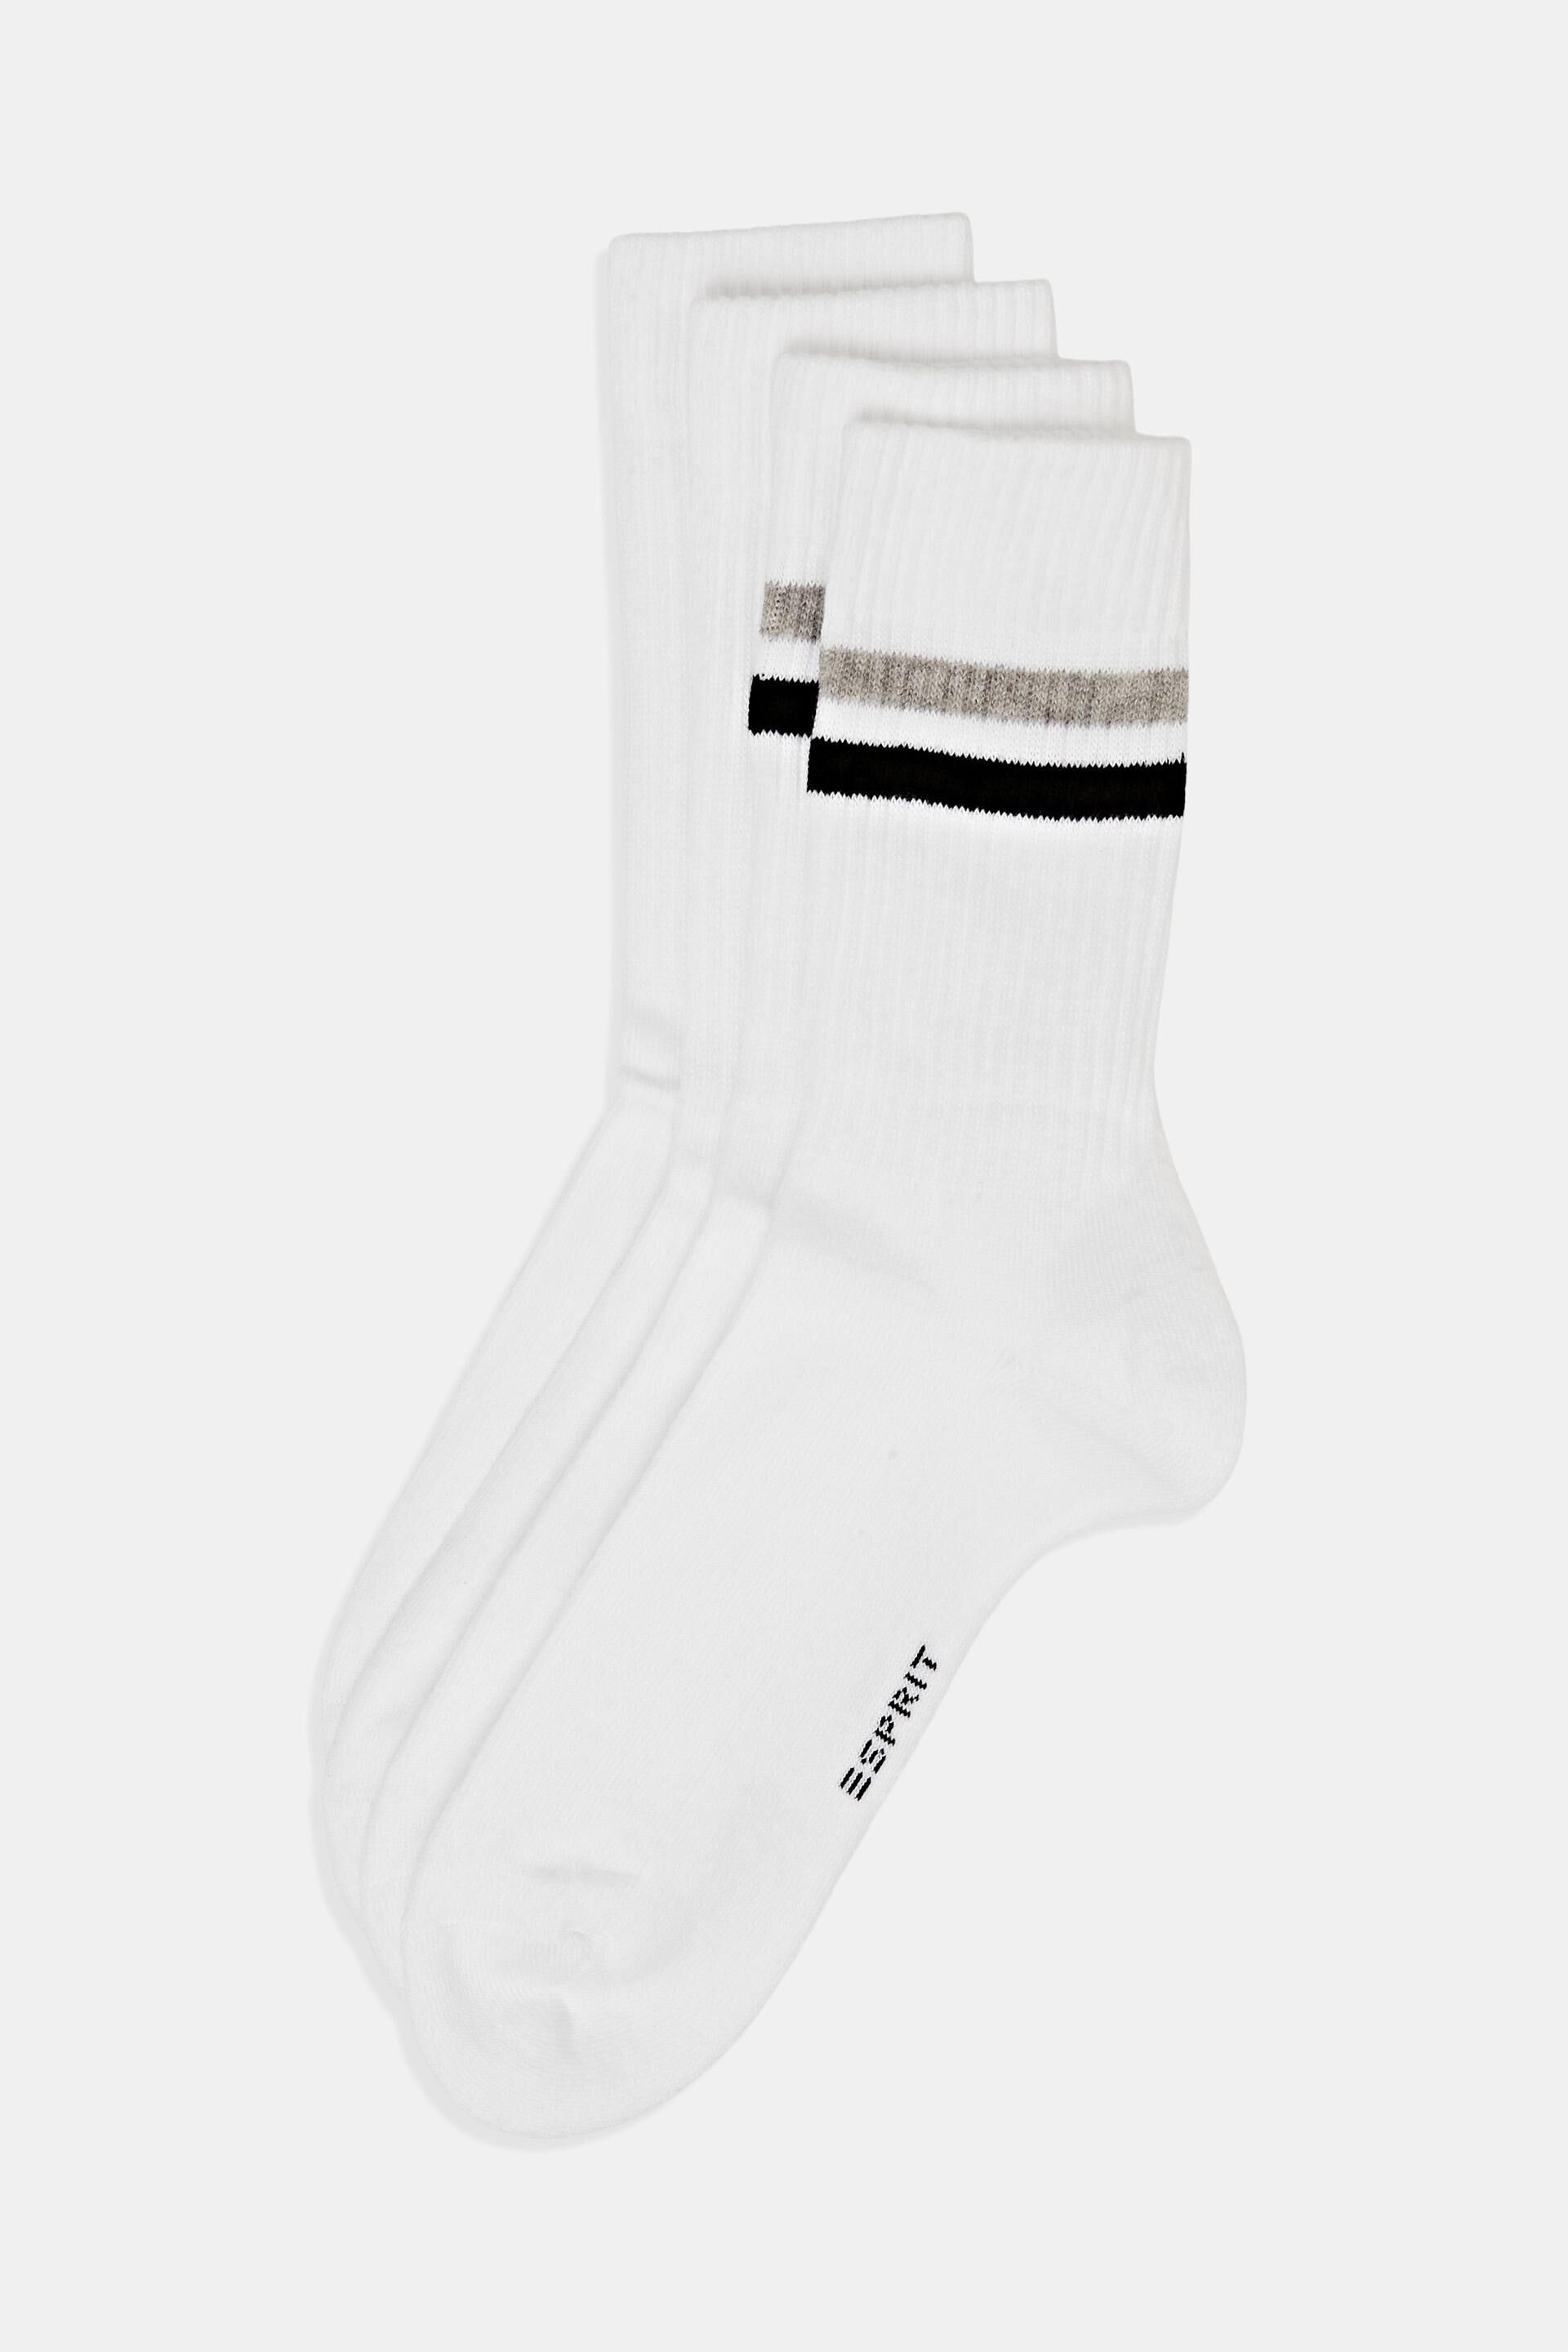 Esprit socks, athletic cotton 2-pack organic of